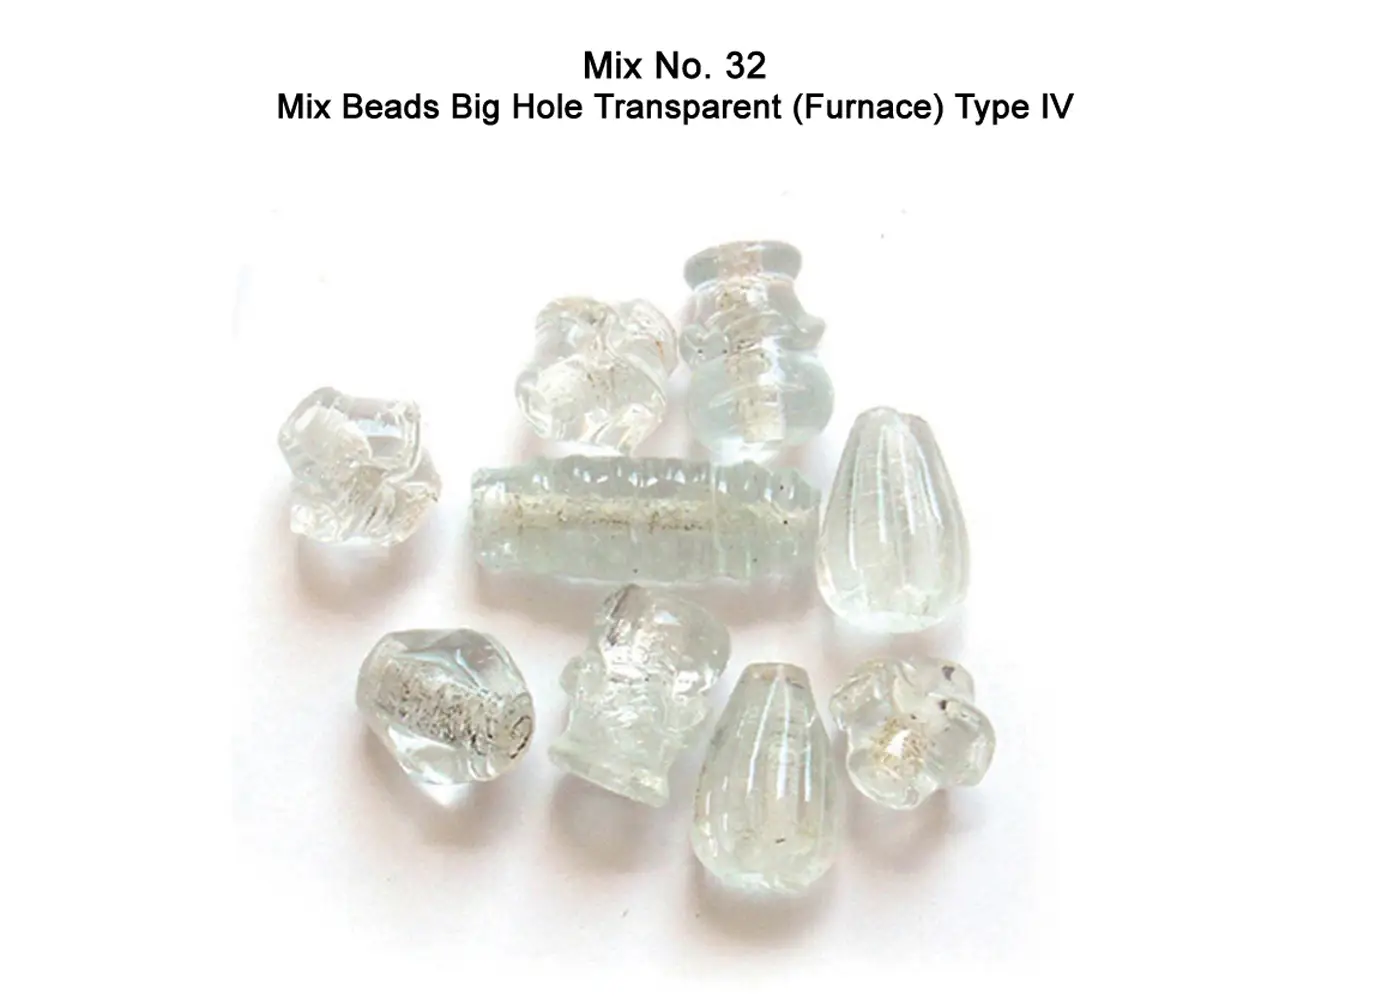 Mix Beads Big Hole Transparent (Furnace) Type IV